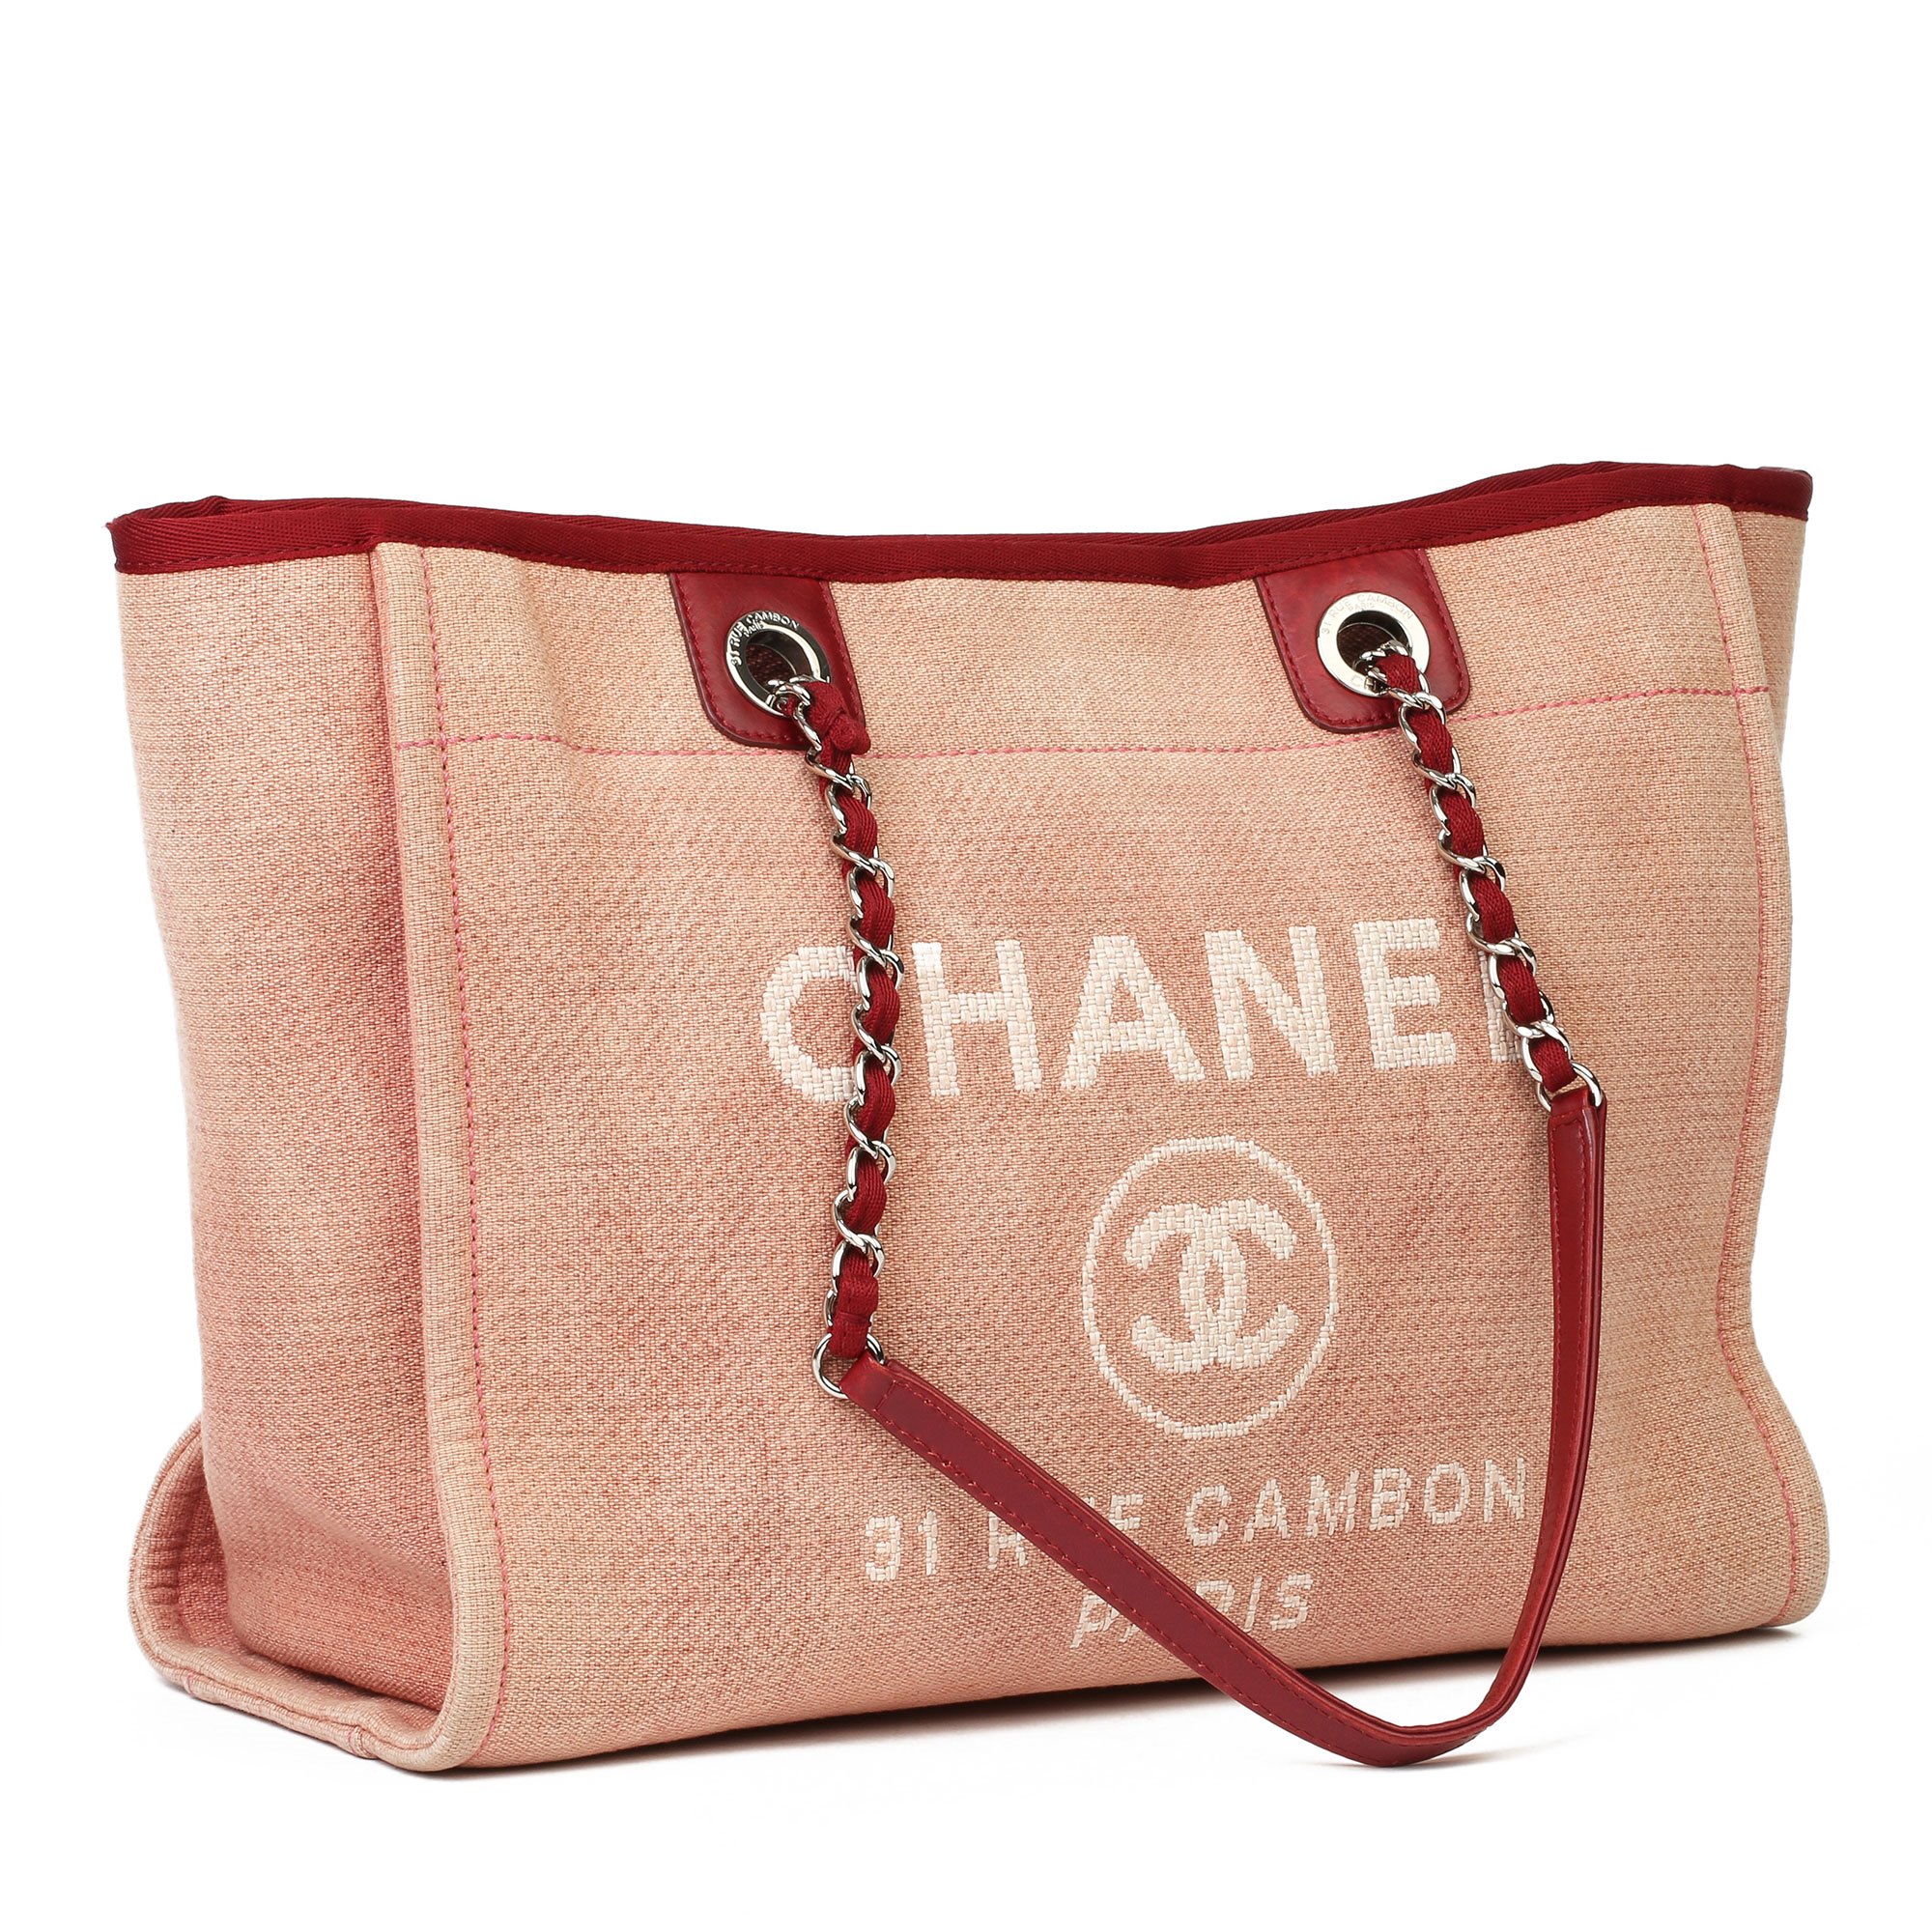 Chanel Small Deauville Tote 2012 CB286 | Second Hand Handbags